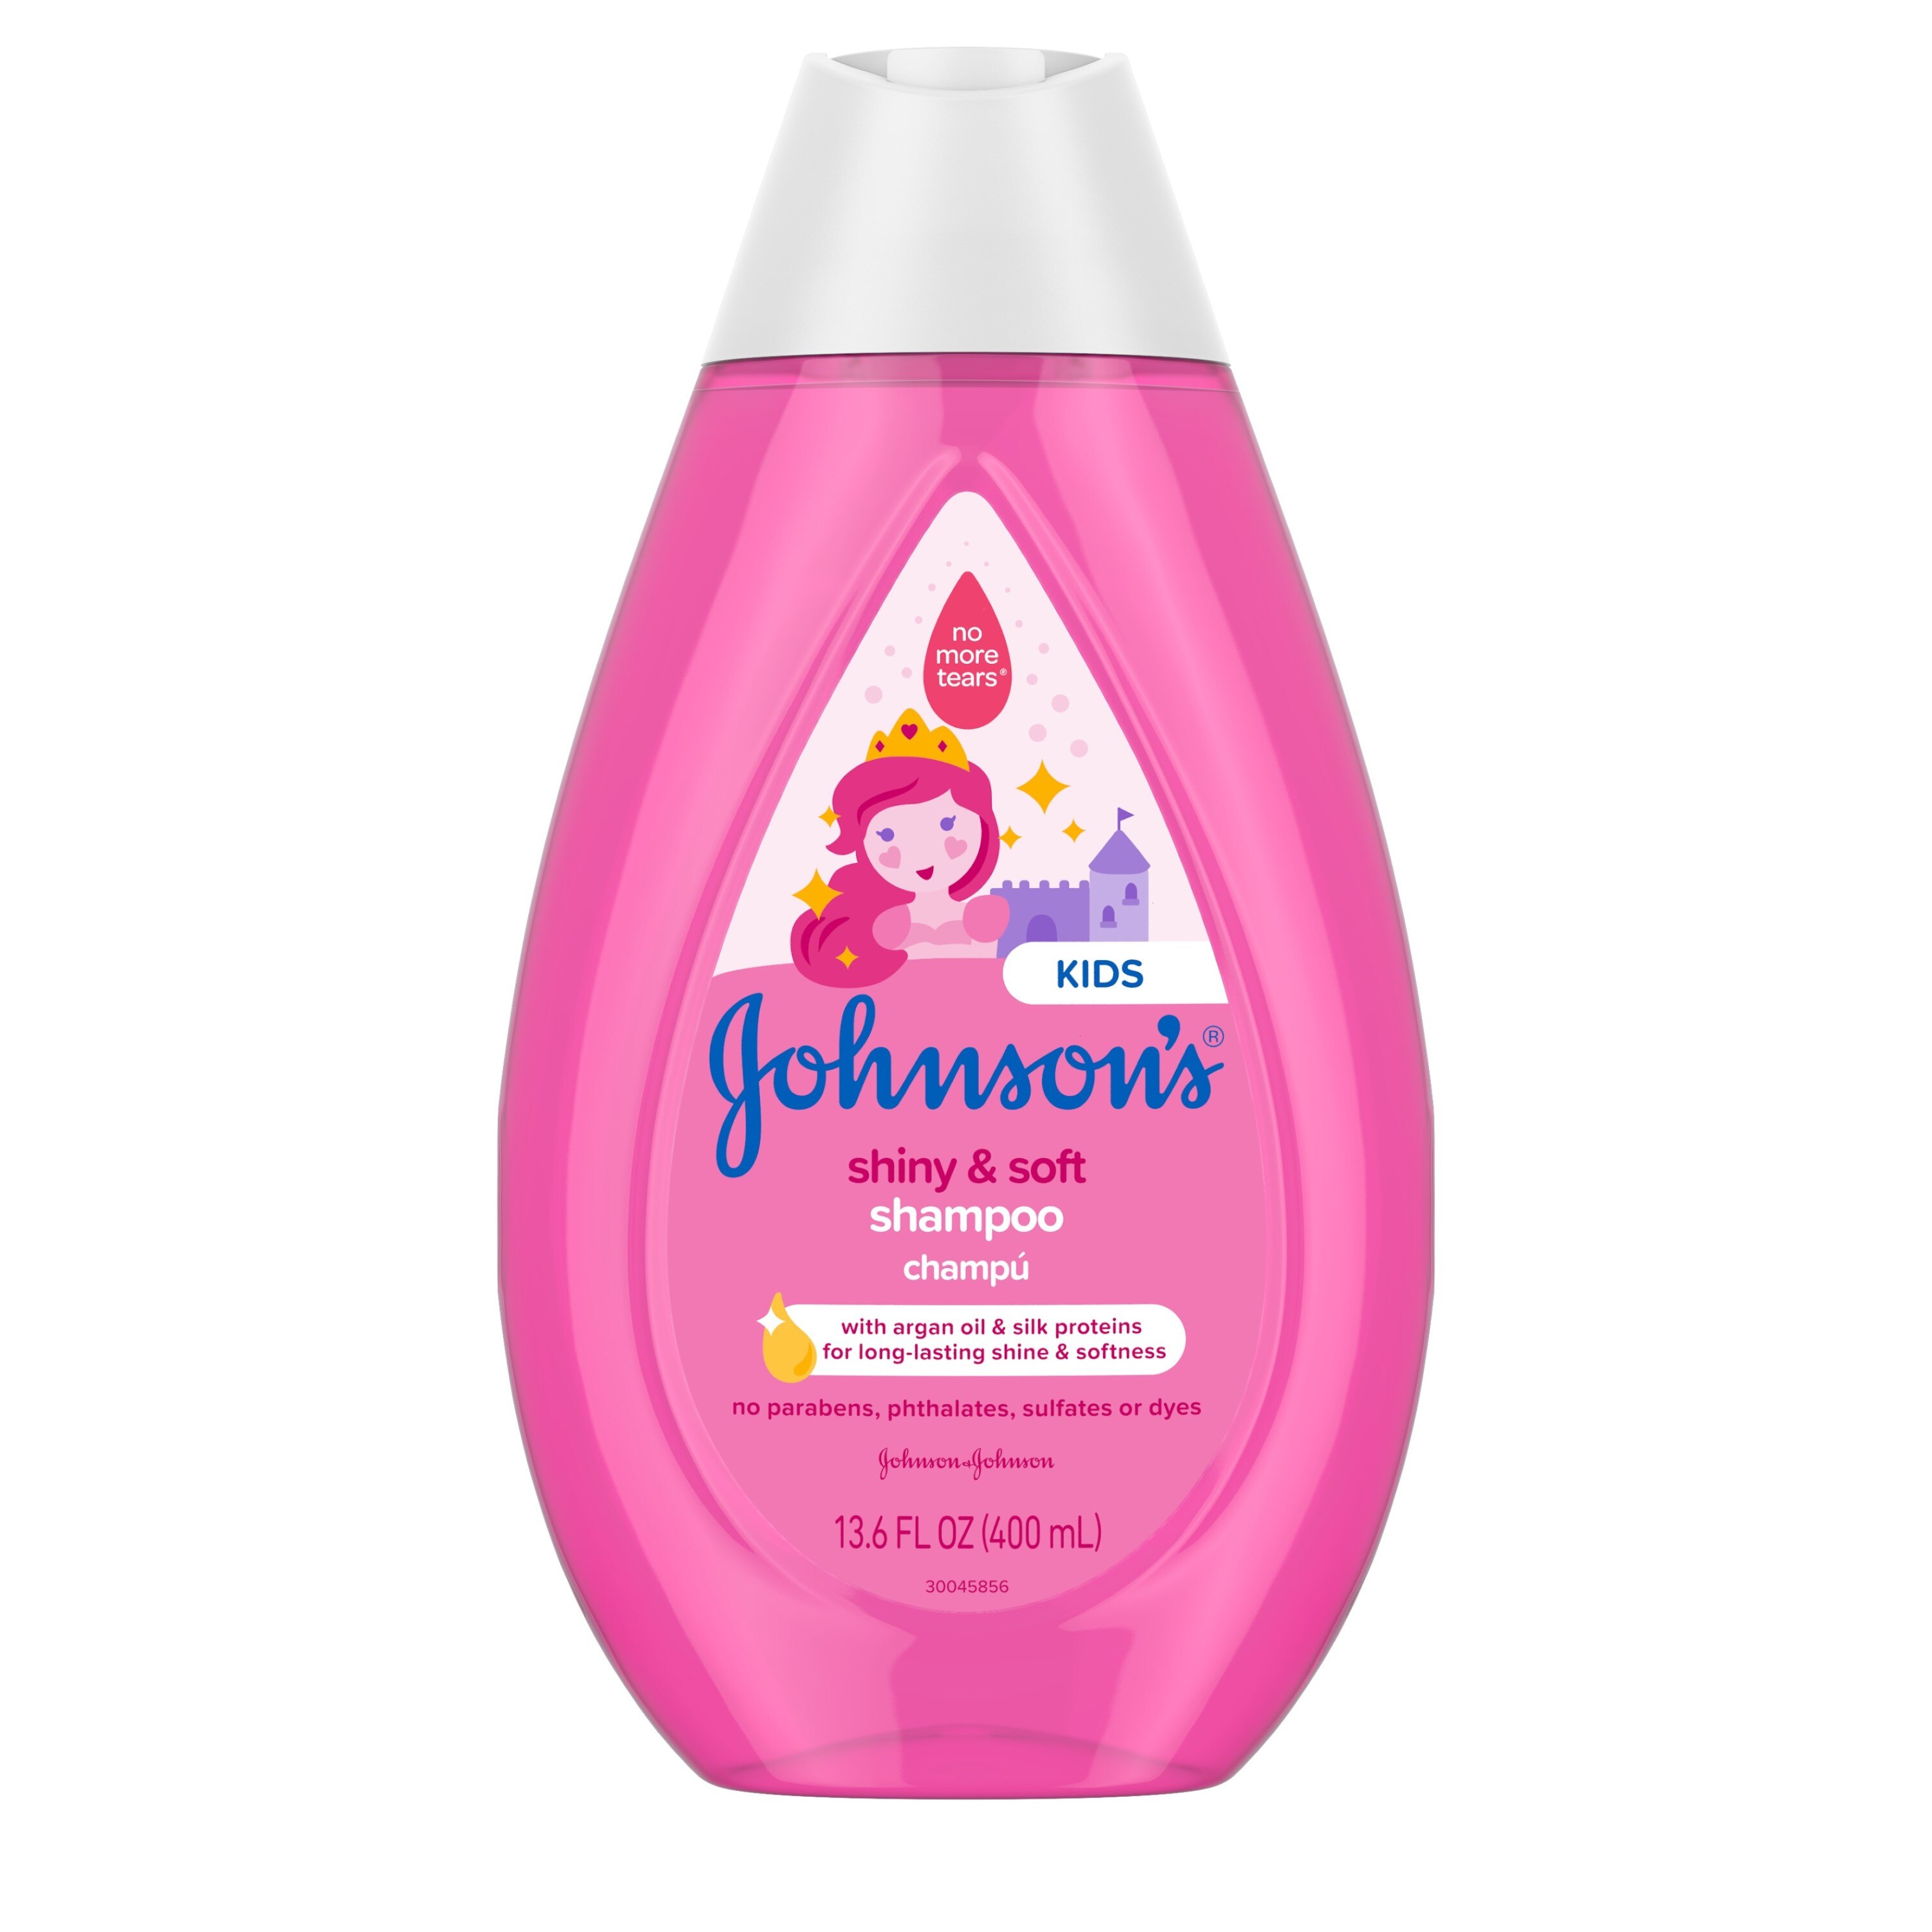 Johnson's Kids Shiny & Soft Shampoo